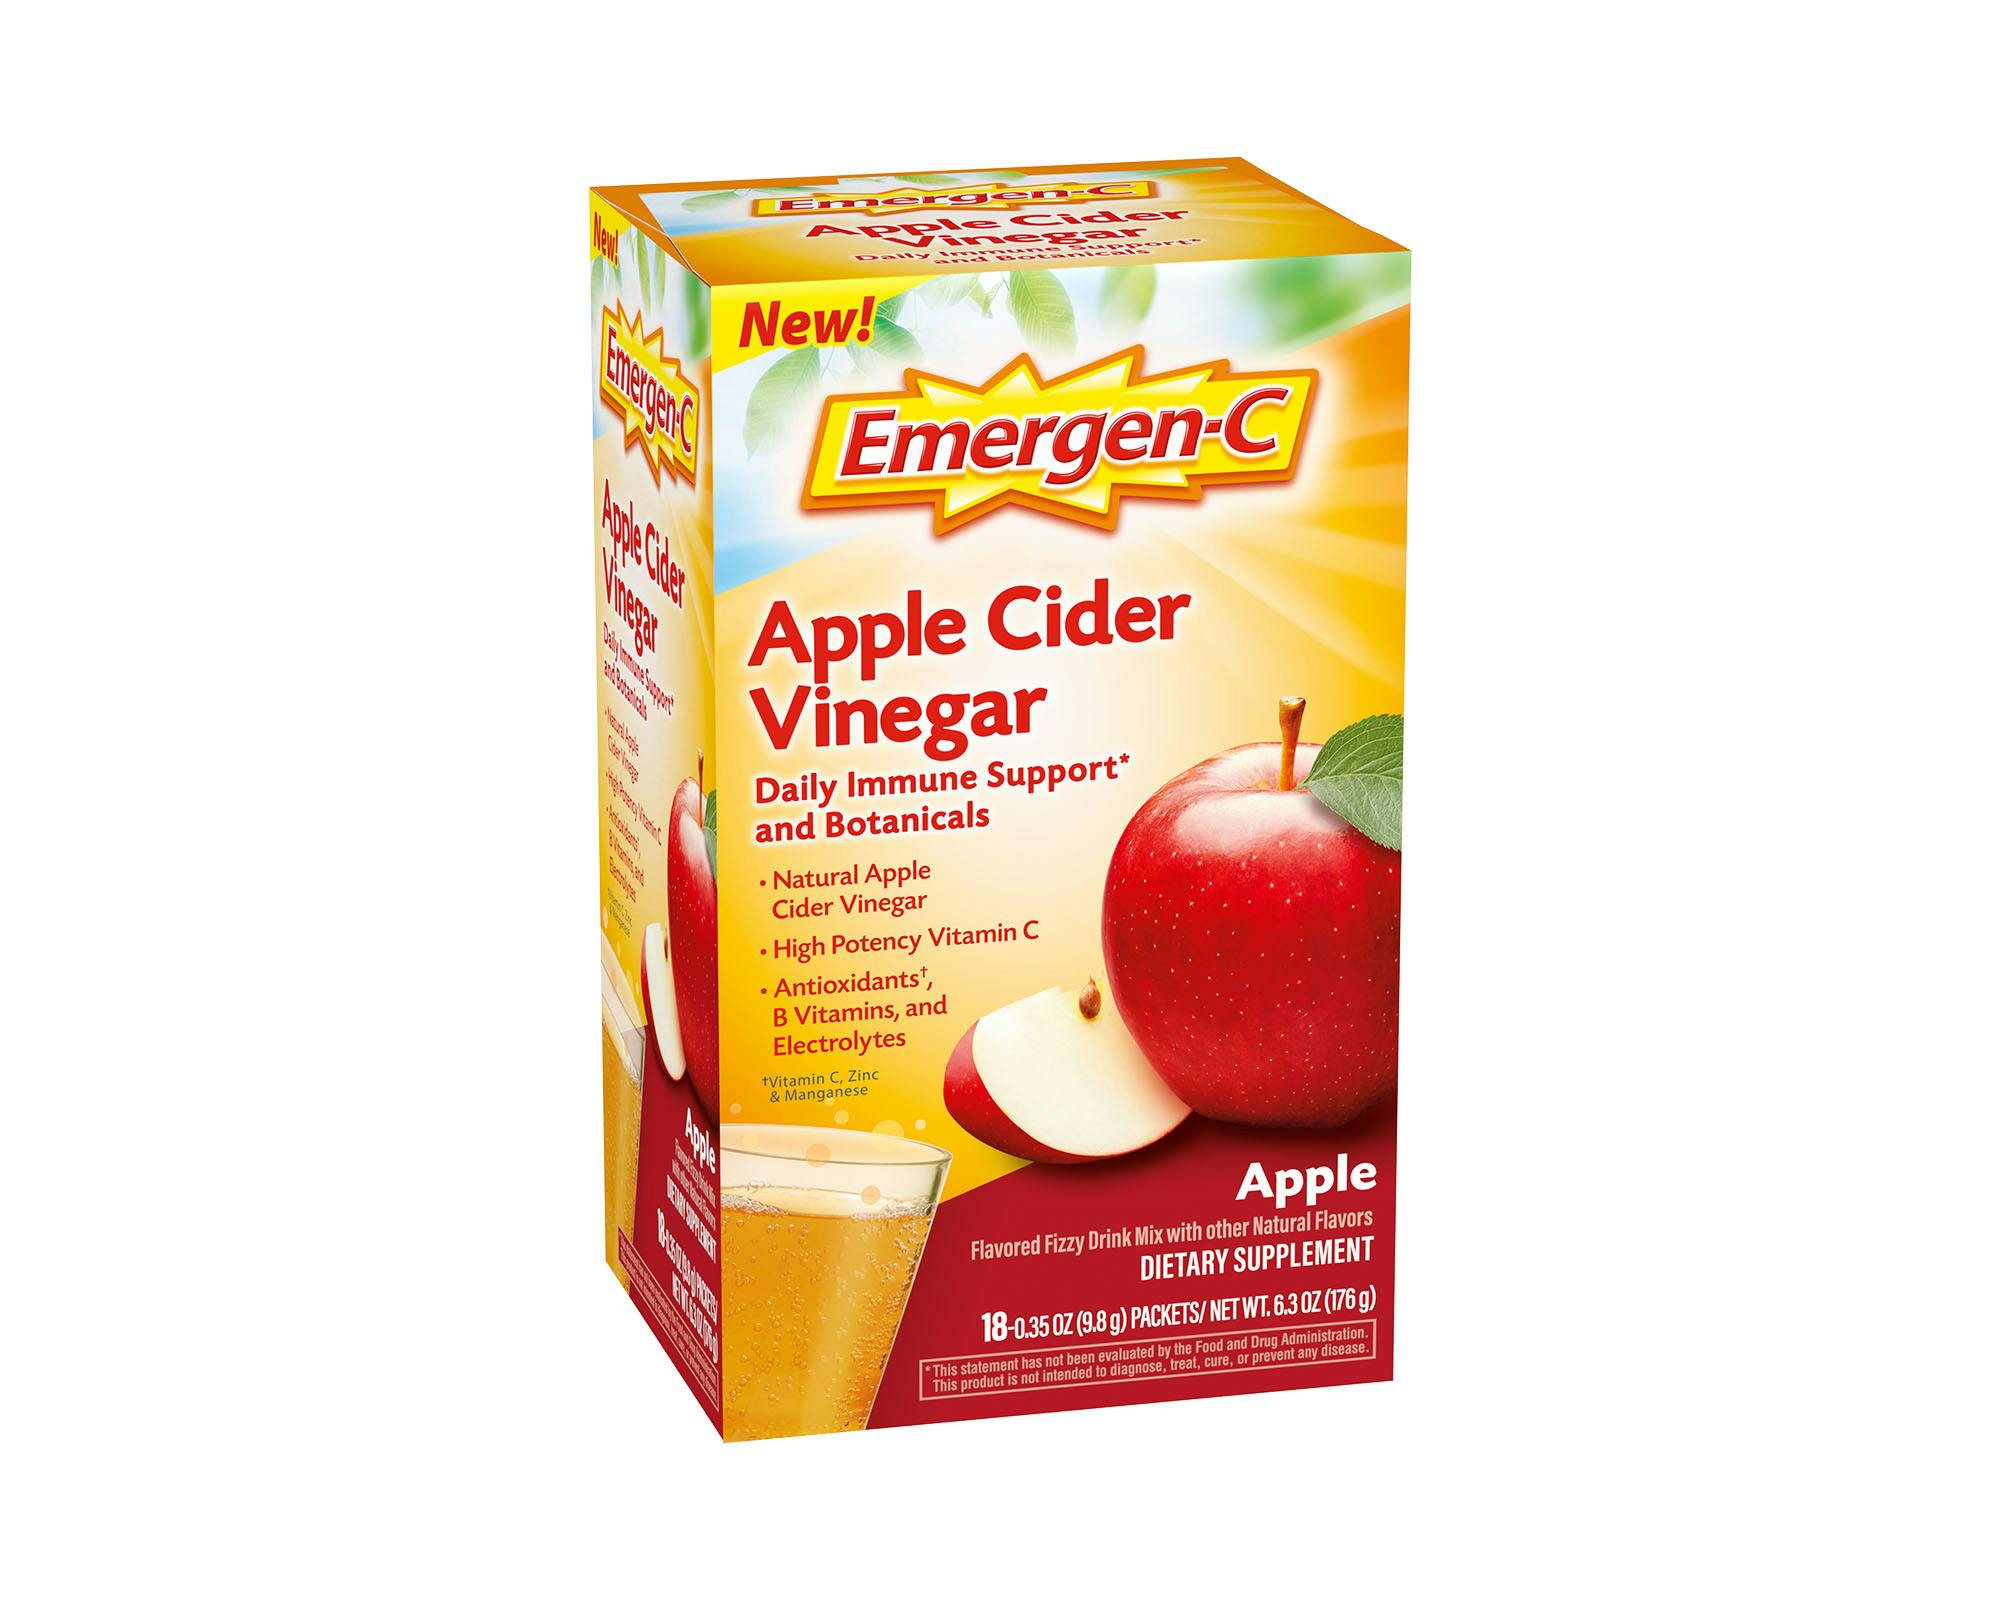 Apple Cider Vinegar Botanicals Immune Support box angled view